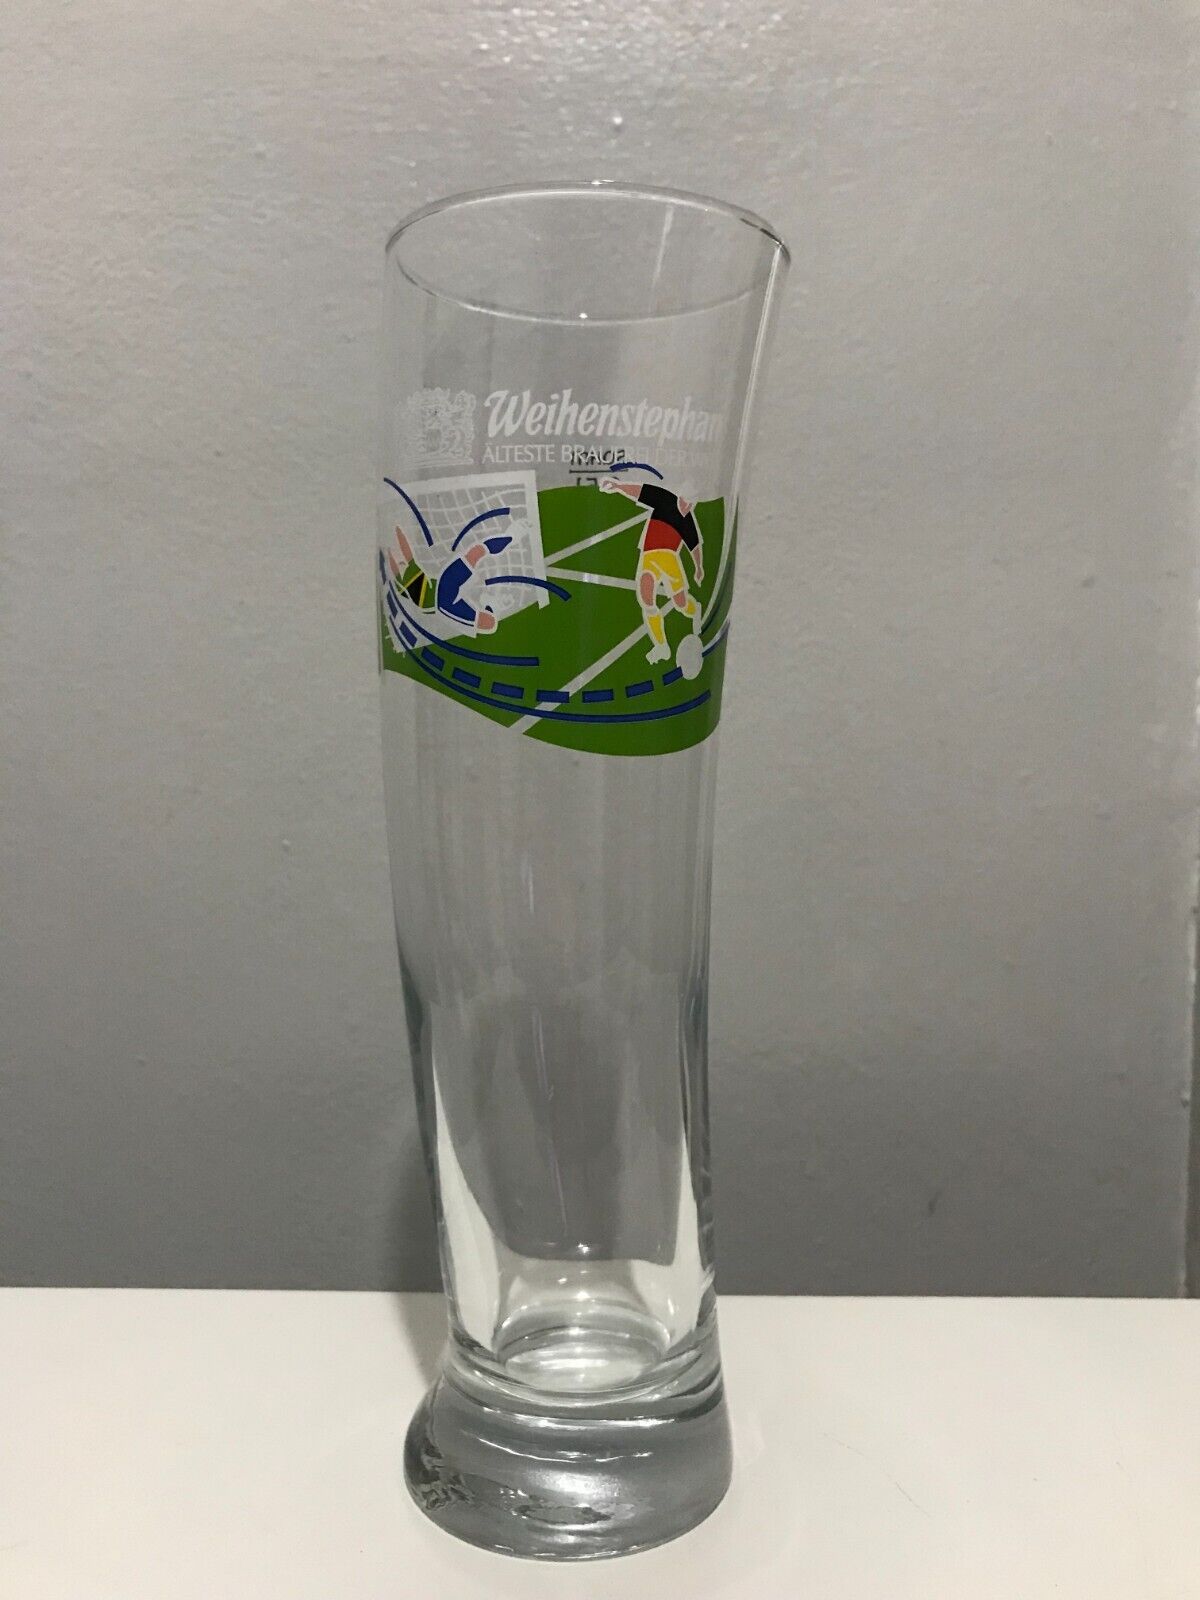 Graphic Beer Glass Curved Soccer Weihenstephan Alteste Brauerei Der Welt Germany